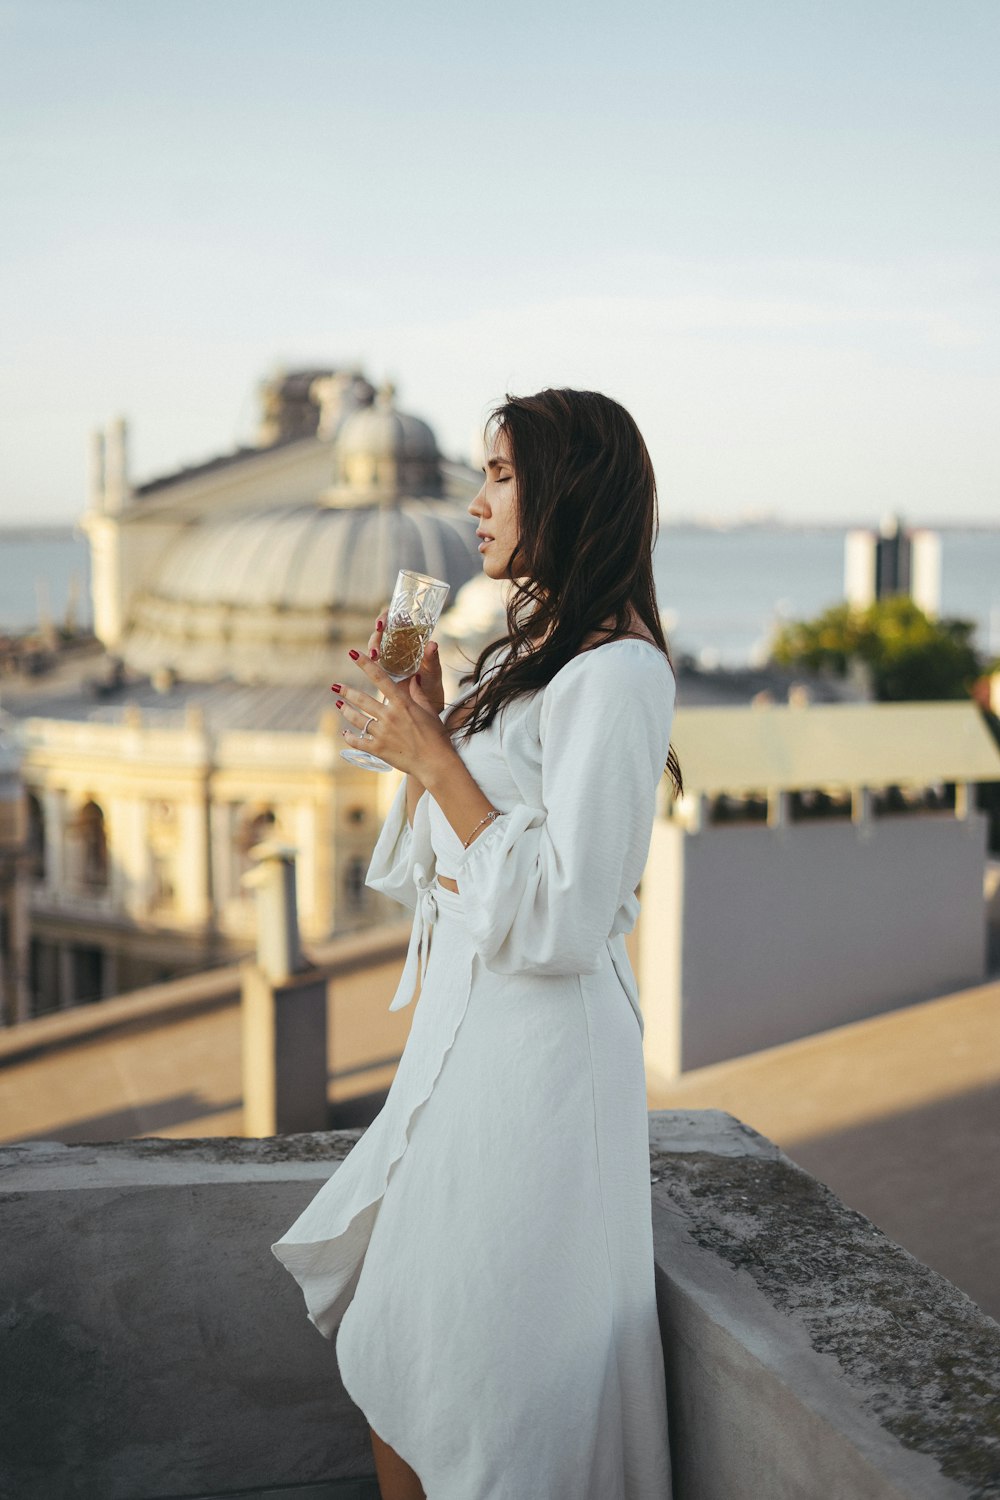 Une femme en robe blanche tenant un verre de vin